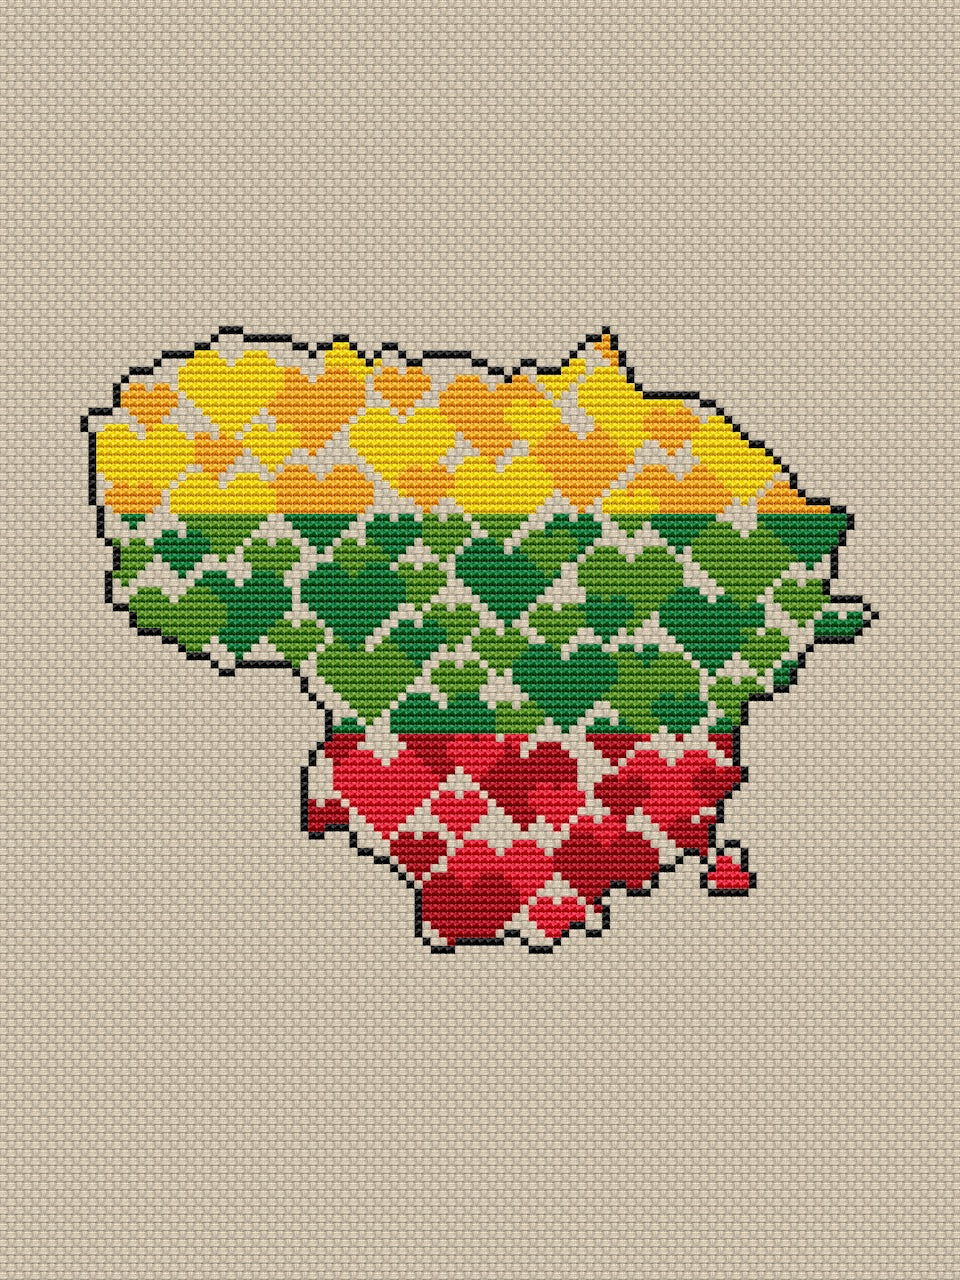 Lithuanian flag embroidery